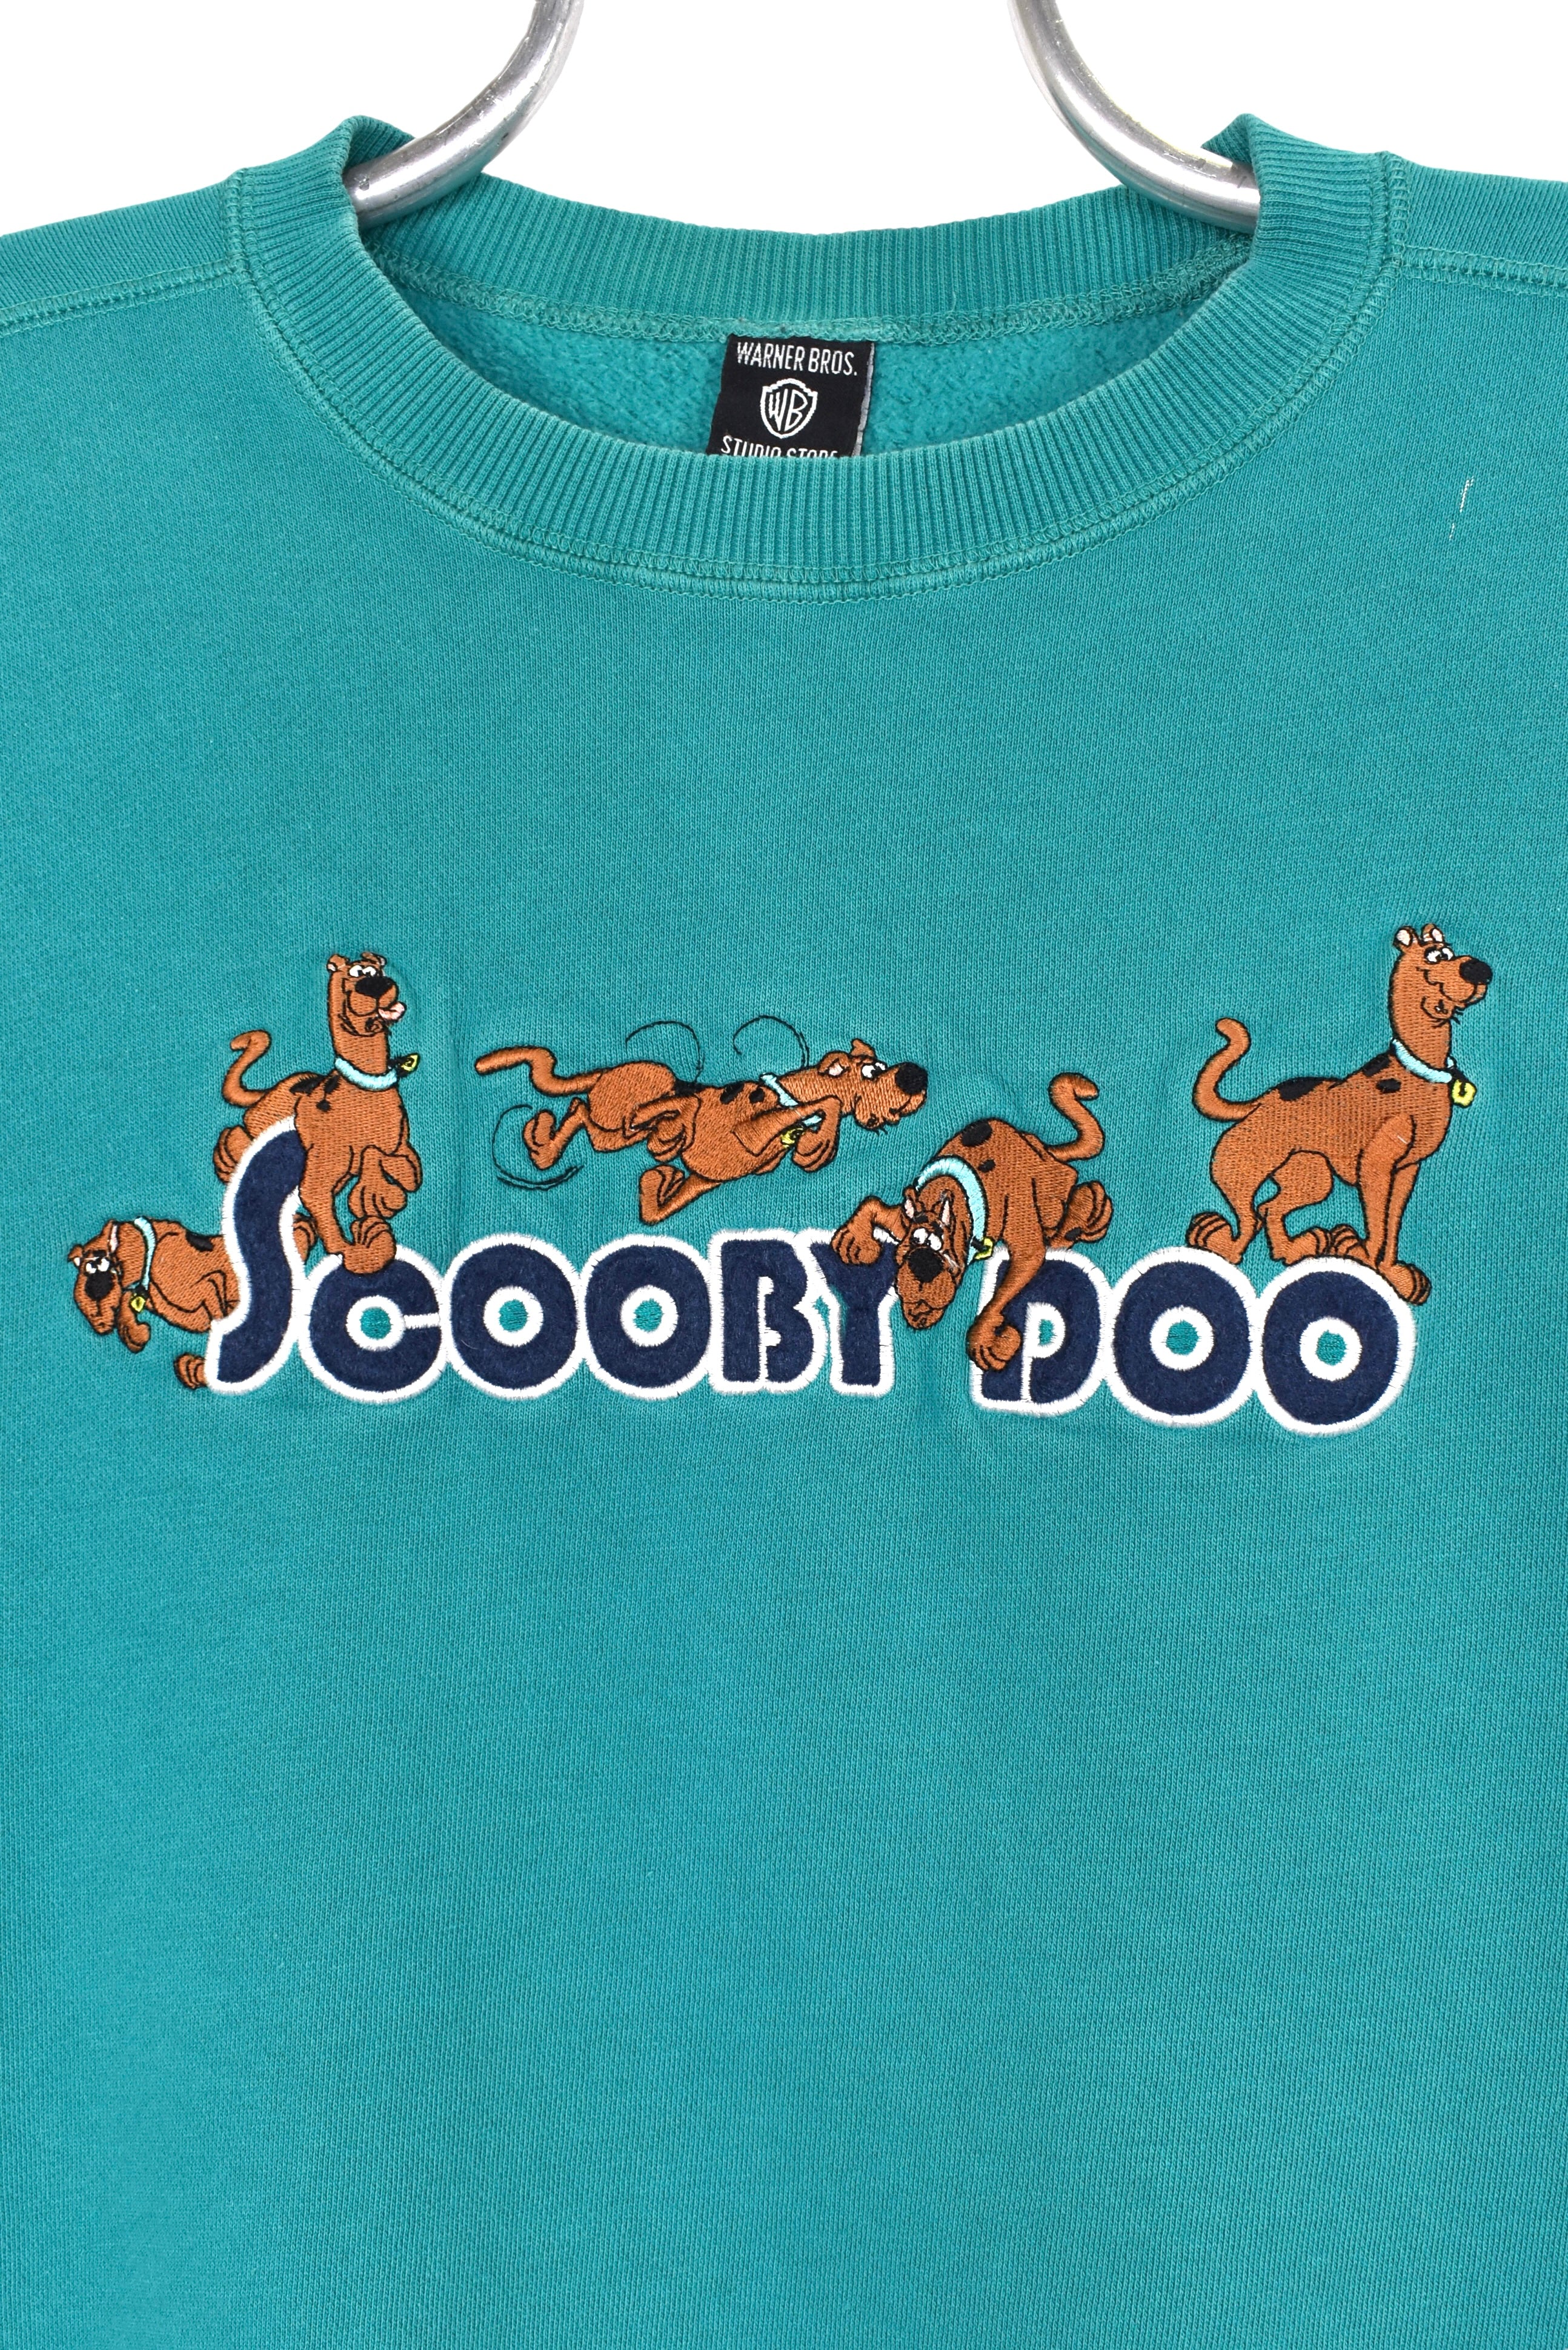 Vintage Scooby Doo sweatshirt, blue embroidered crewneck - Medium